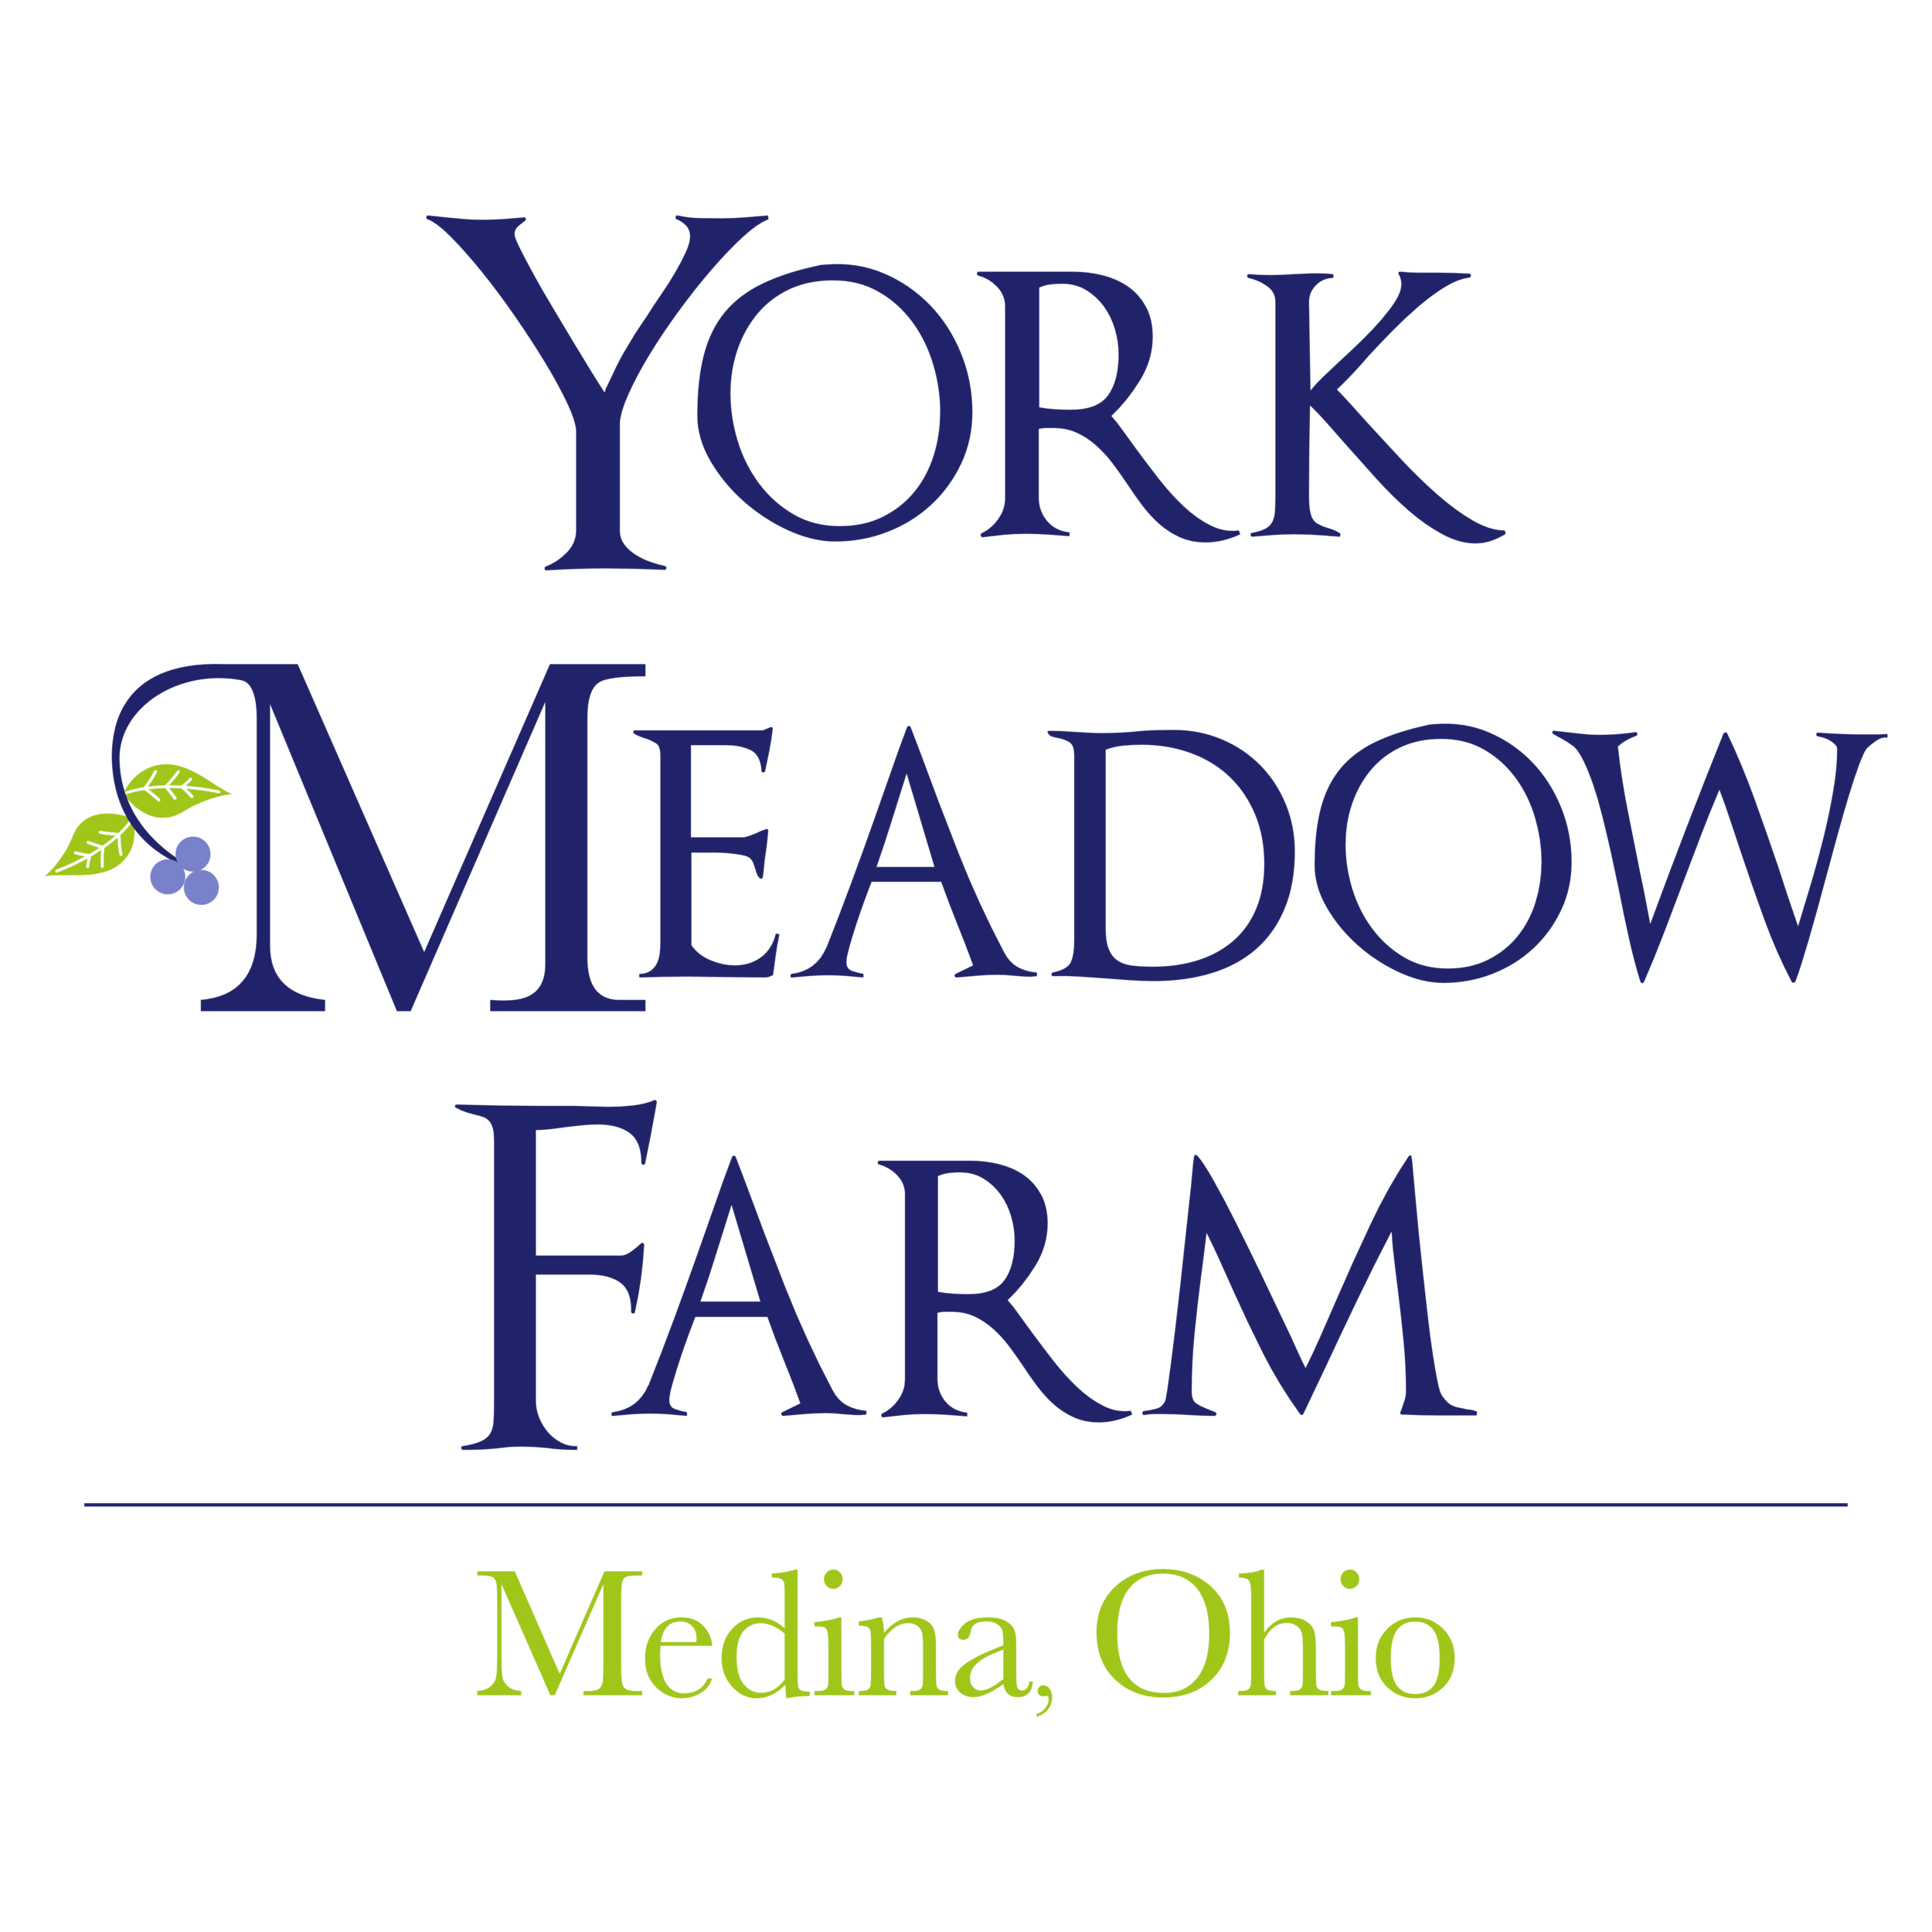 York Meadow Farm